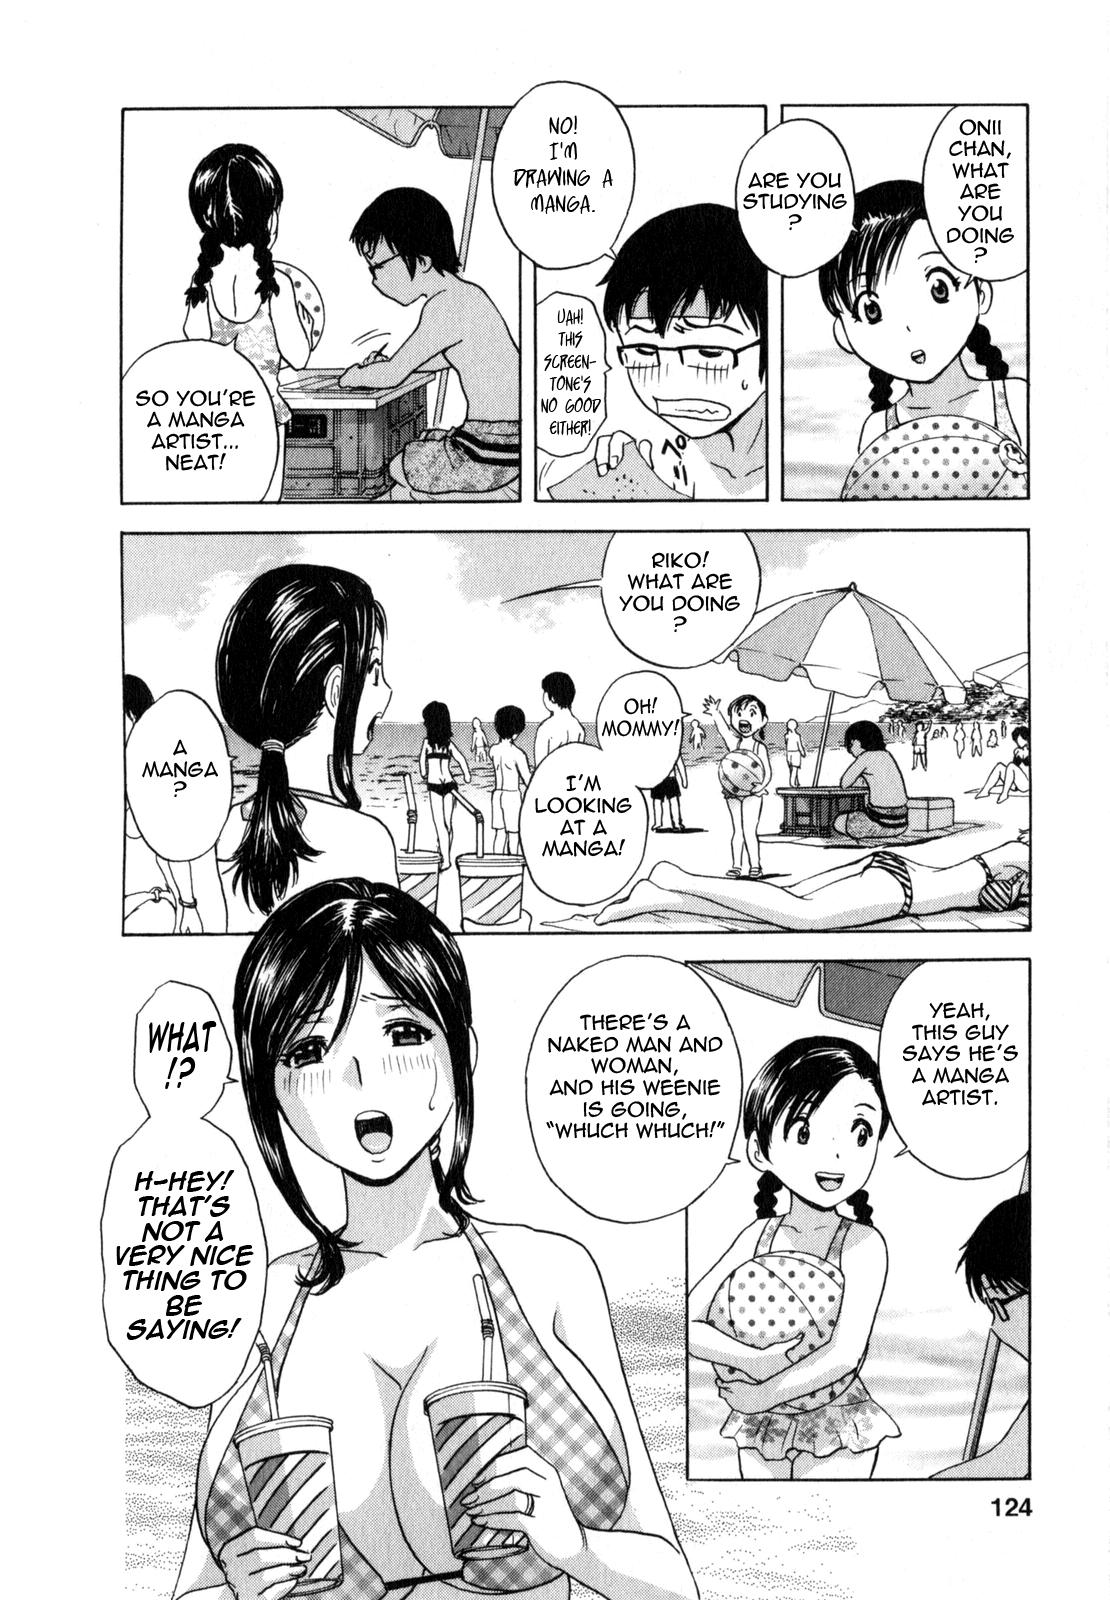 [Hidemaru] Life with Married Women Just Like a Manga 2 - Ch. 1-7 [English] {Tadanohito} 129